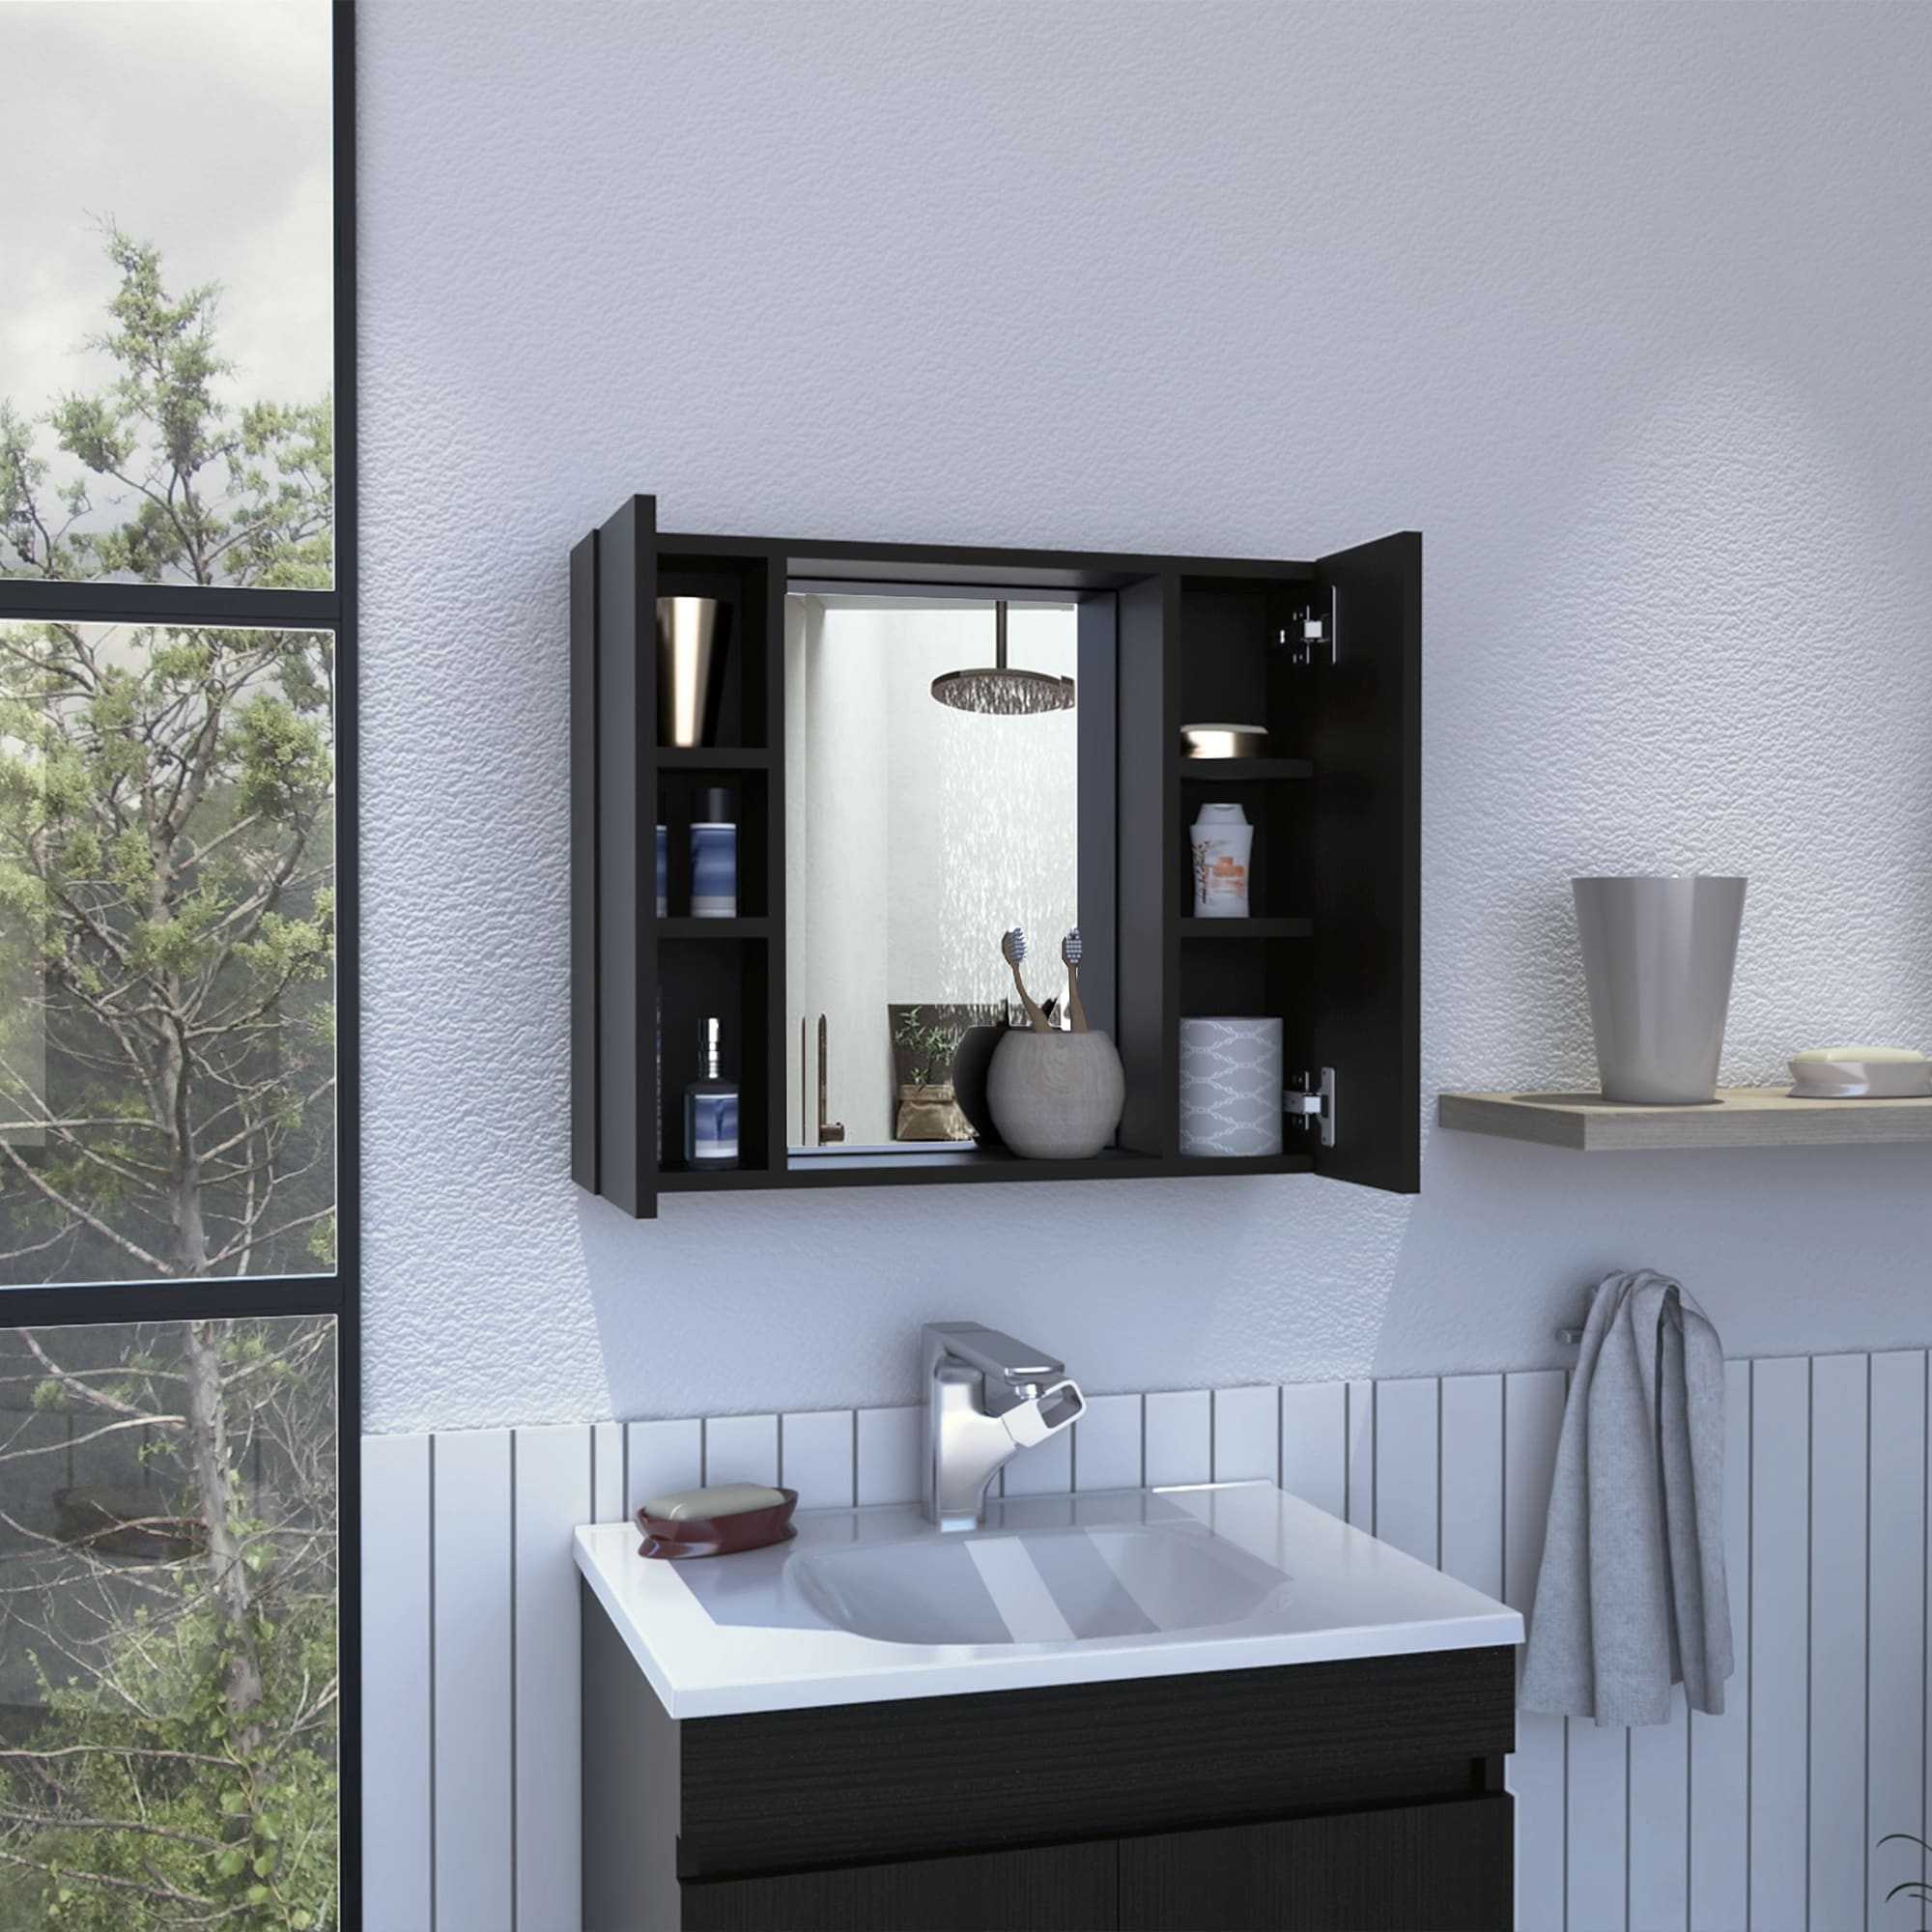 https://ak1.ostkcdn.com/images/products/is/images/direct/8bf39a3a75d2890ec9280adde0c47770819c66f8/1-Drawer-Bathroom-Medicine-Cabinet-Black-Light-Grey-White.jpg